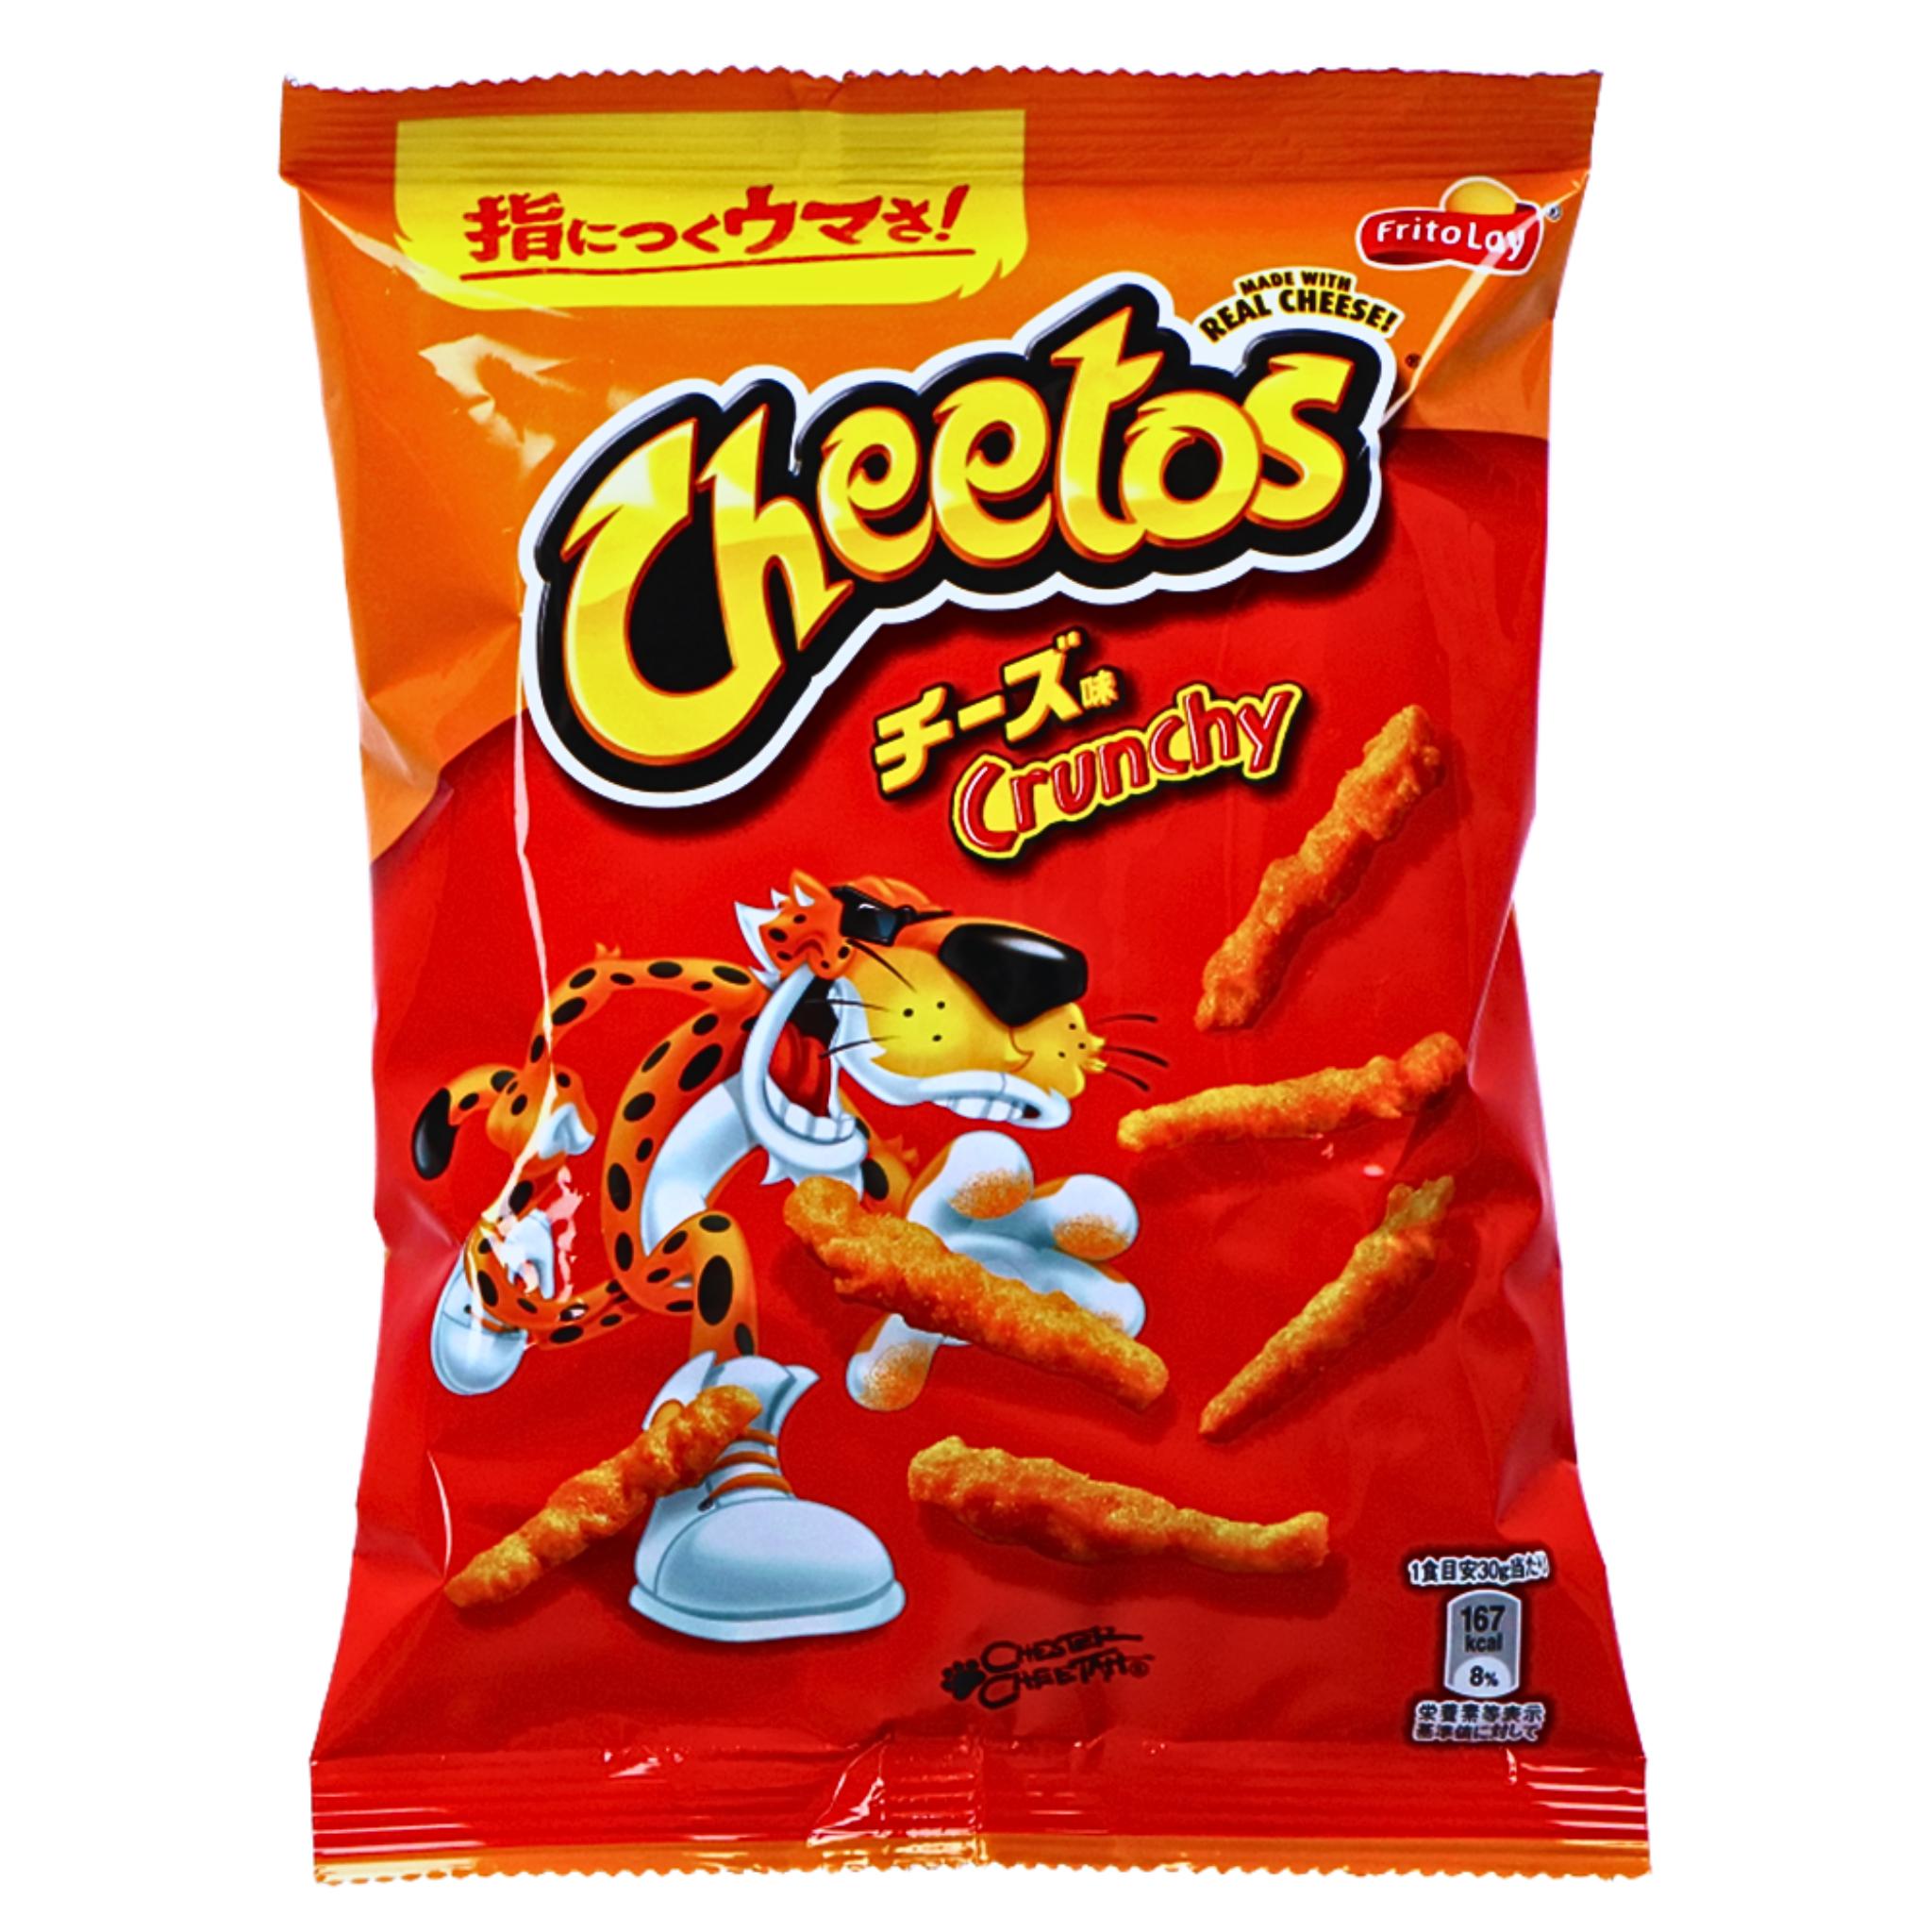 Cheetos Crunchy Cheese - 75g (JAPANS)